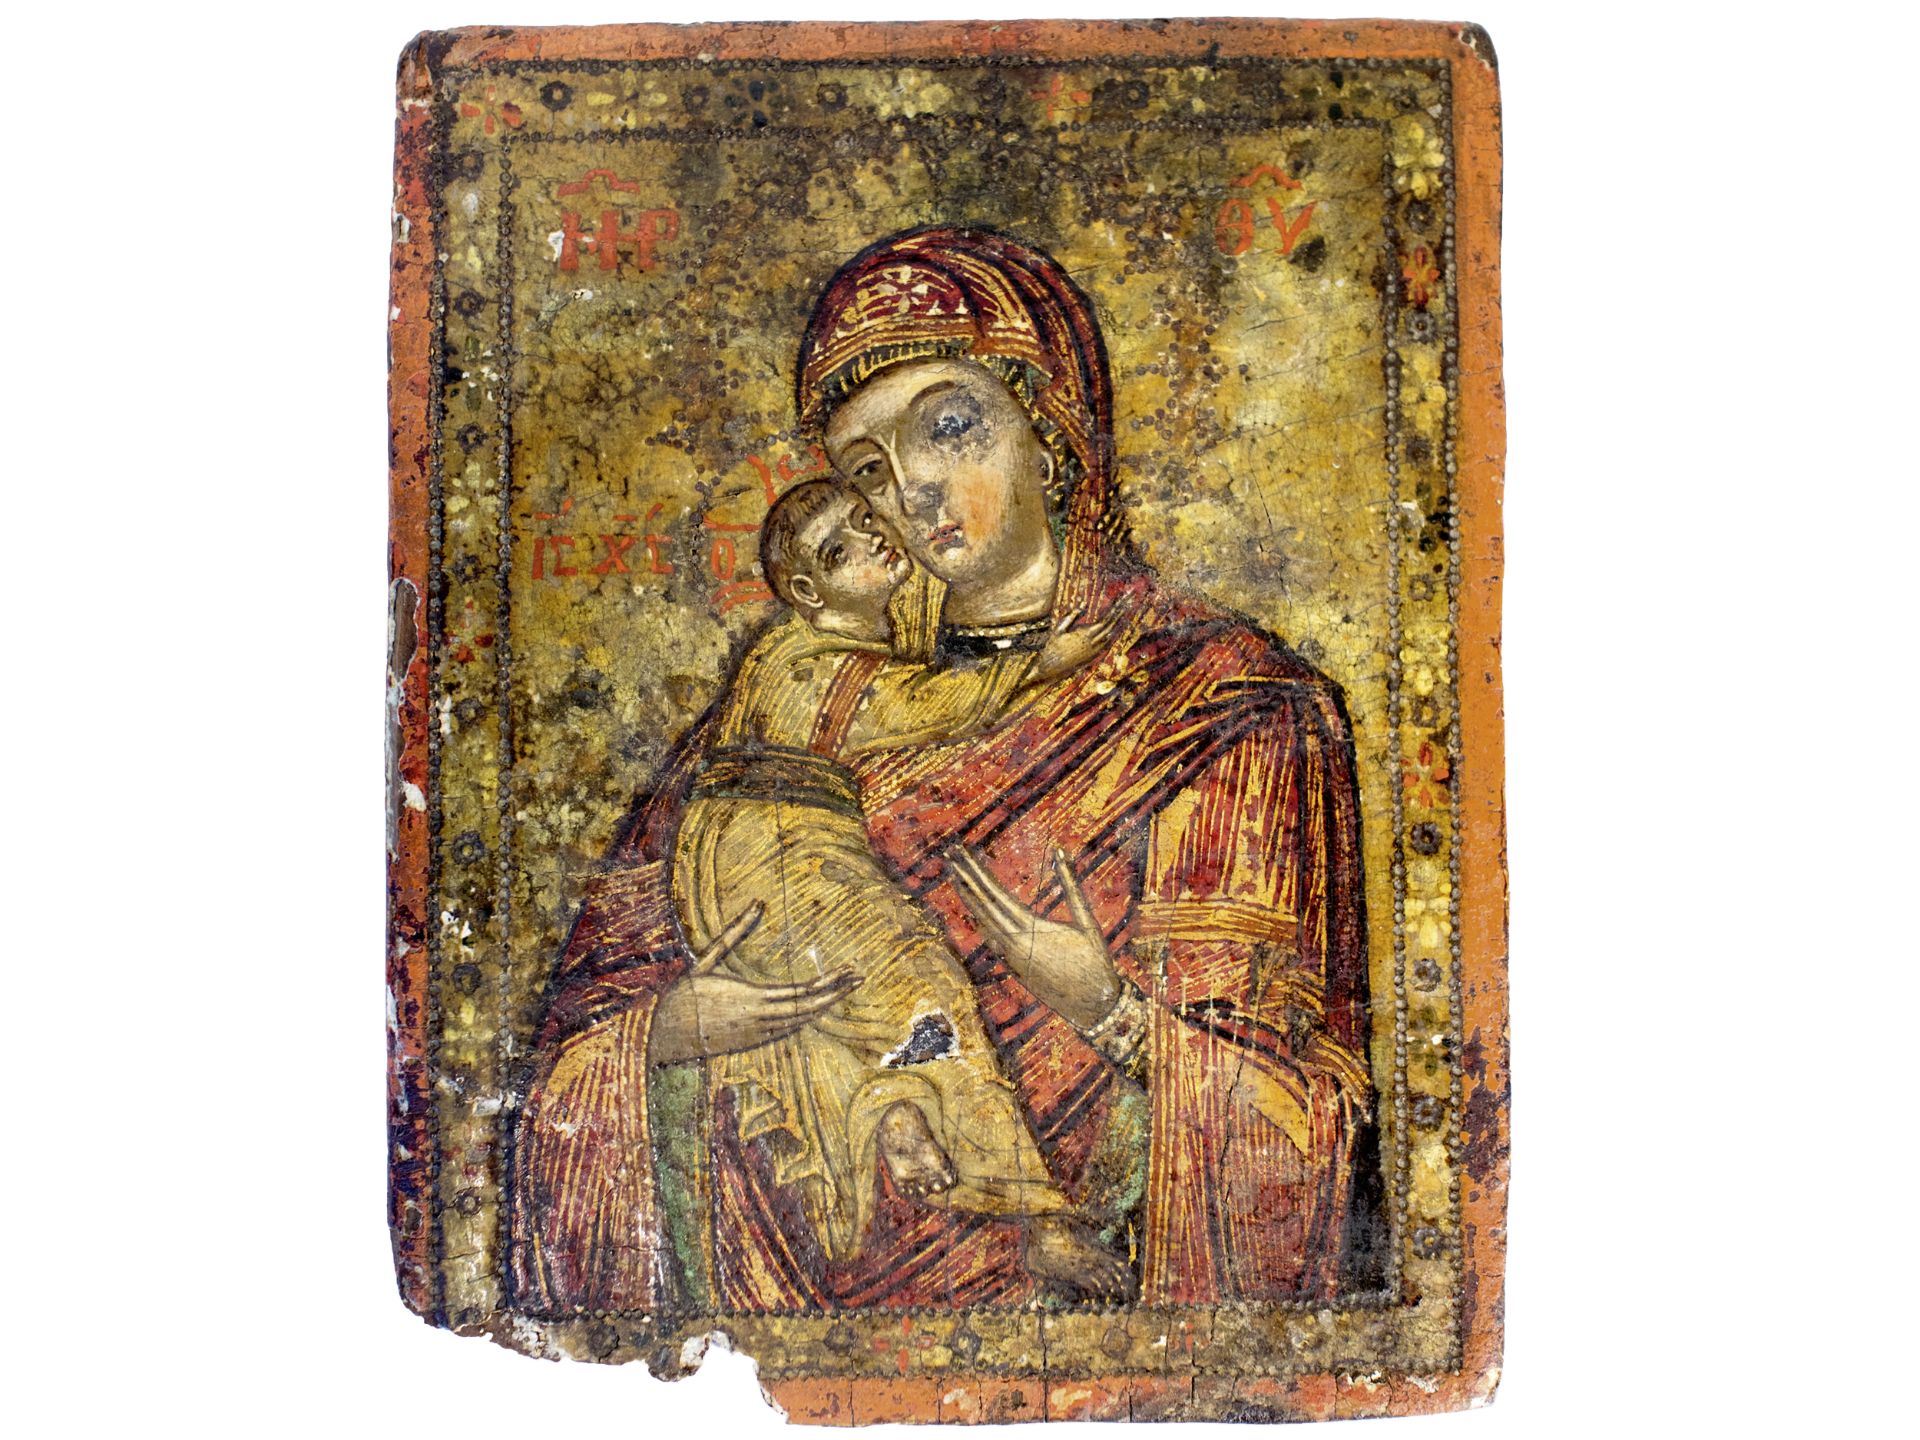 Tafelbild/Ikone, Veneto Kretisch, 12.-14. Jahrhundert